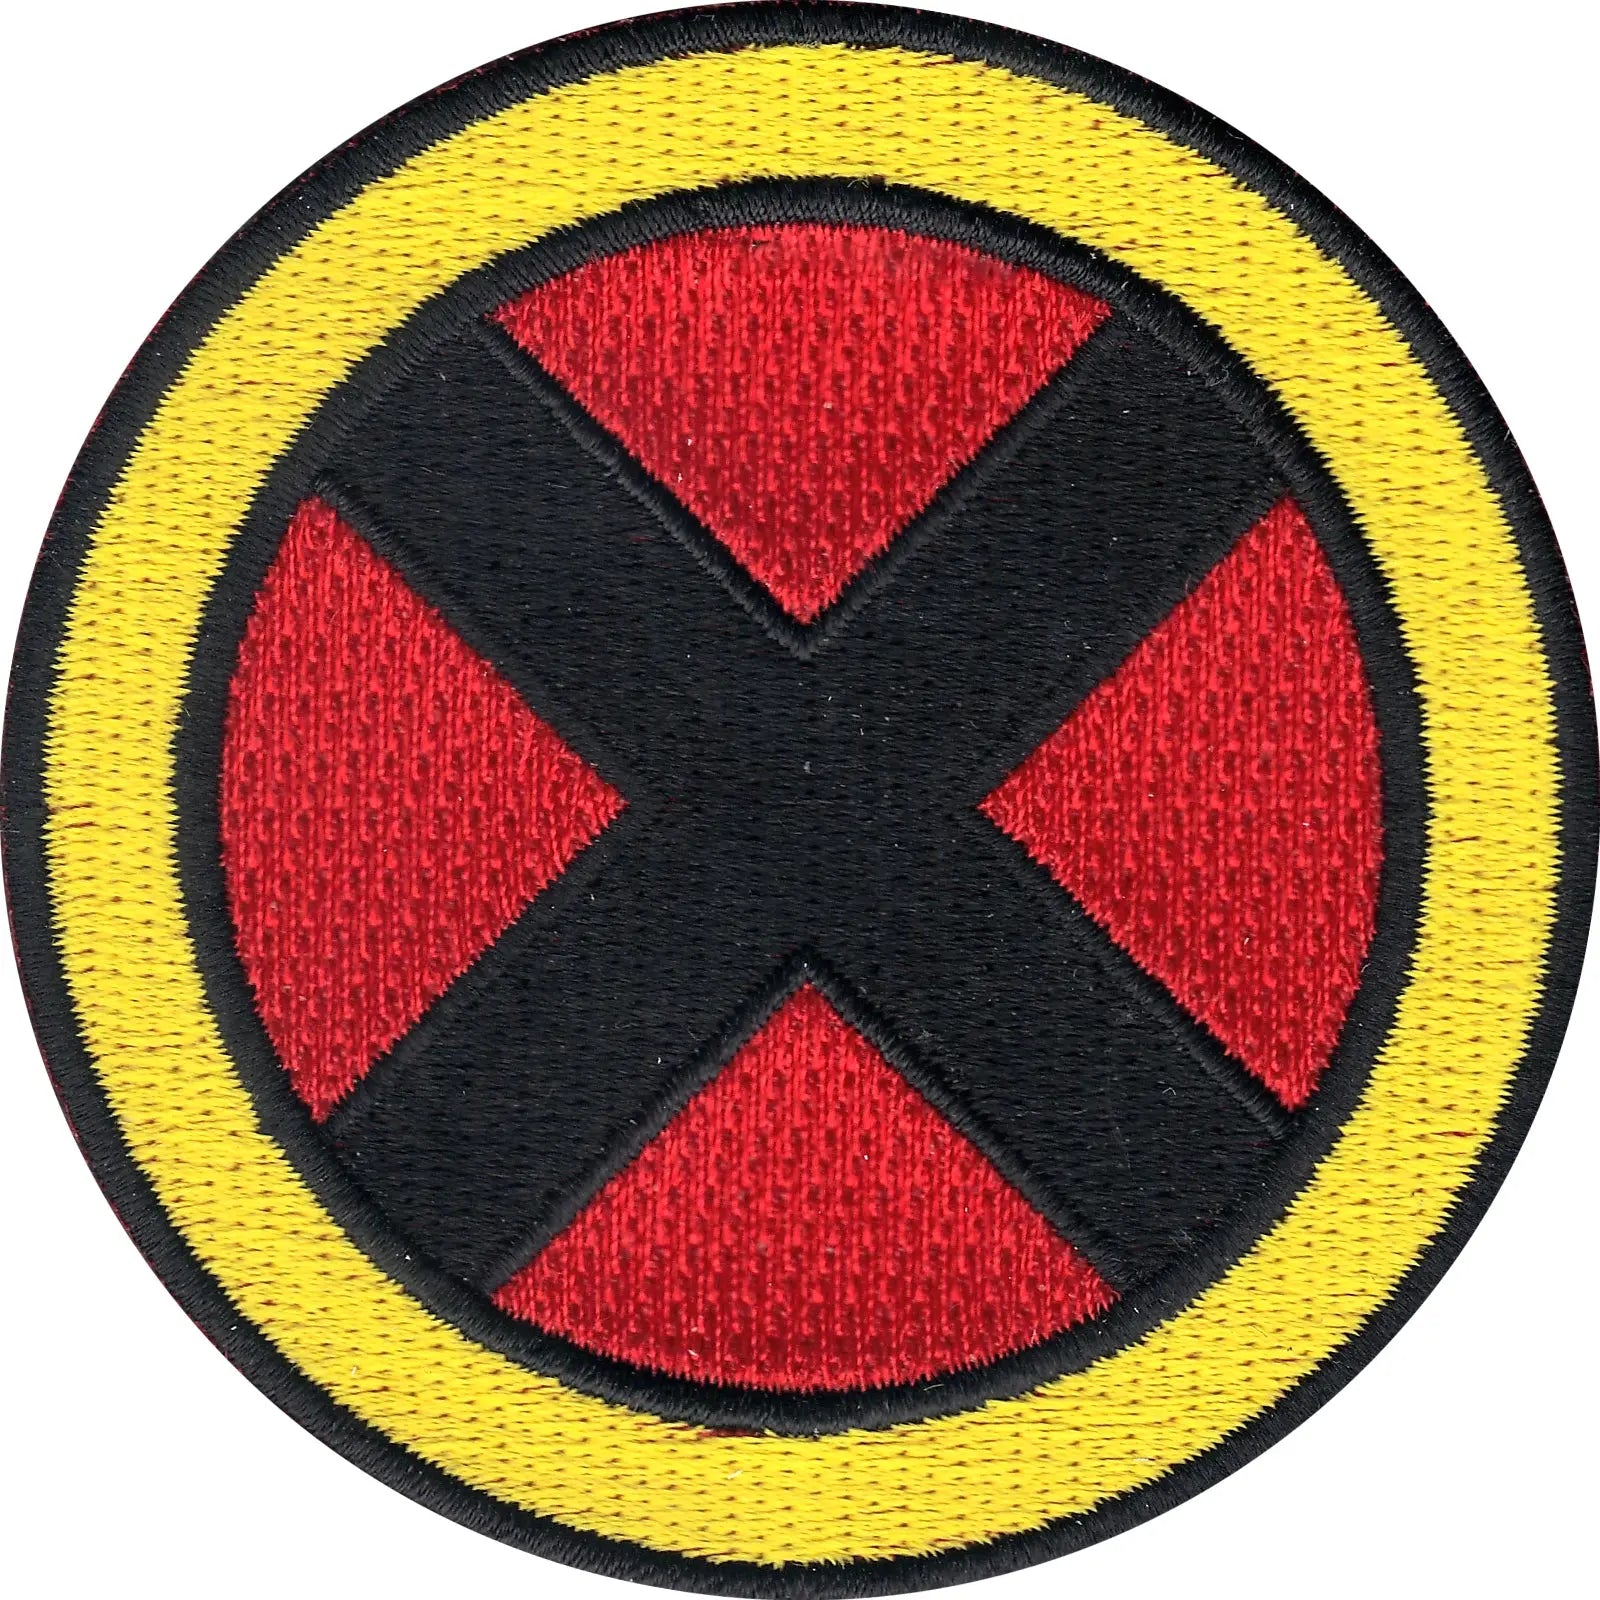 Marvel X-Men Wolverine Logo Iron on Patch 